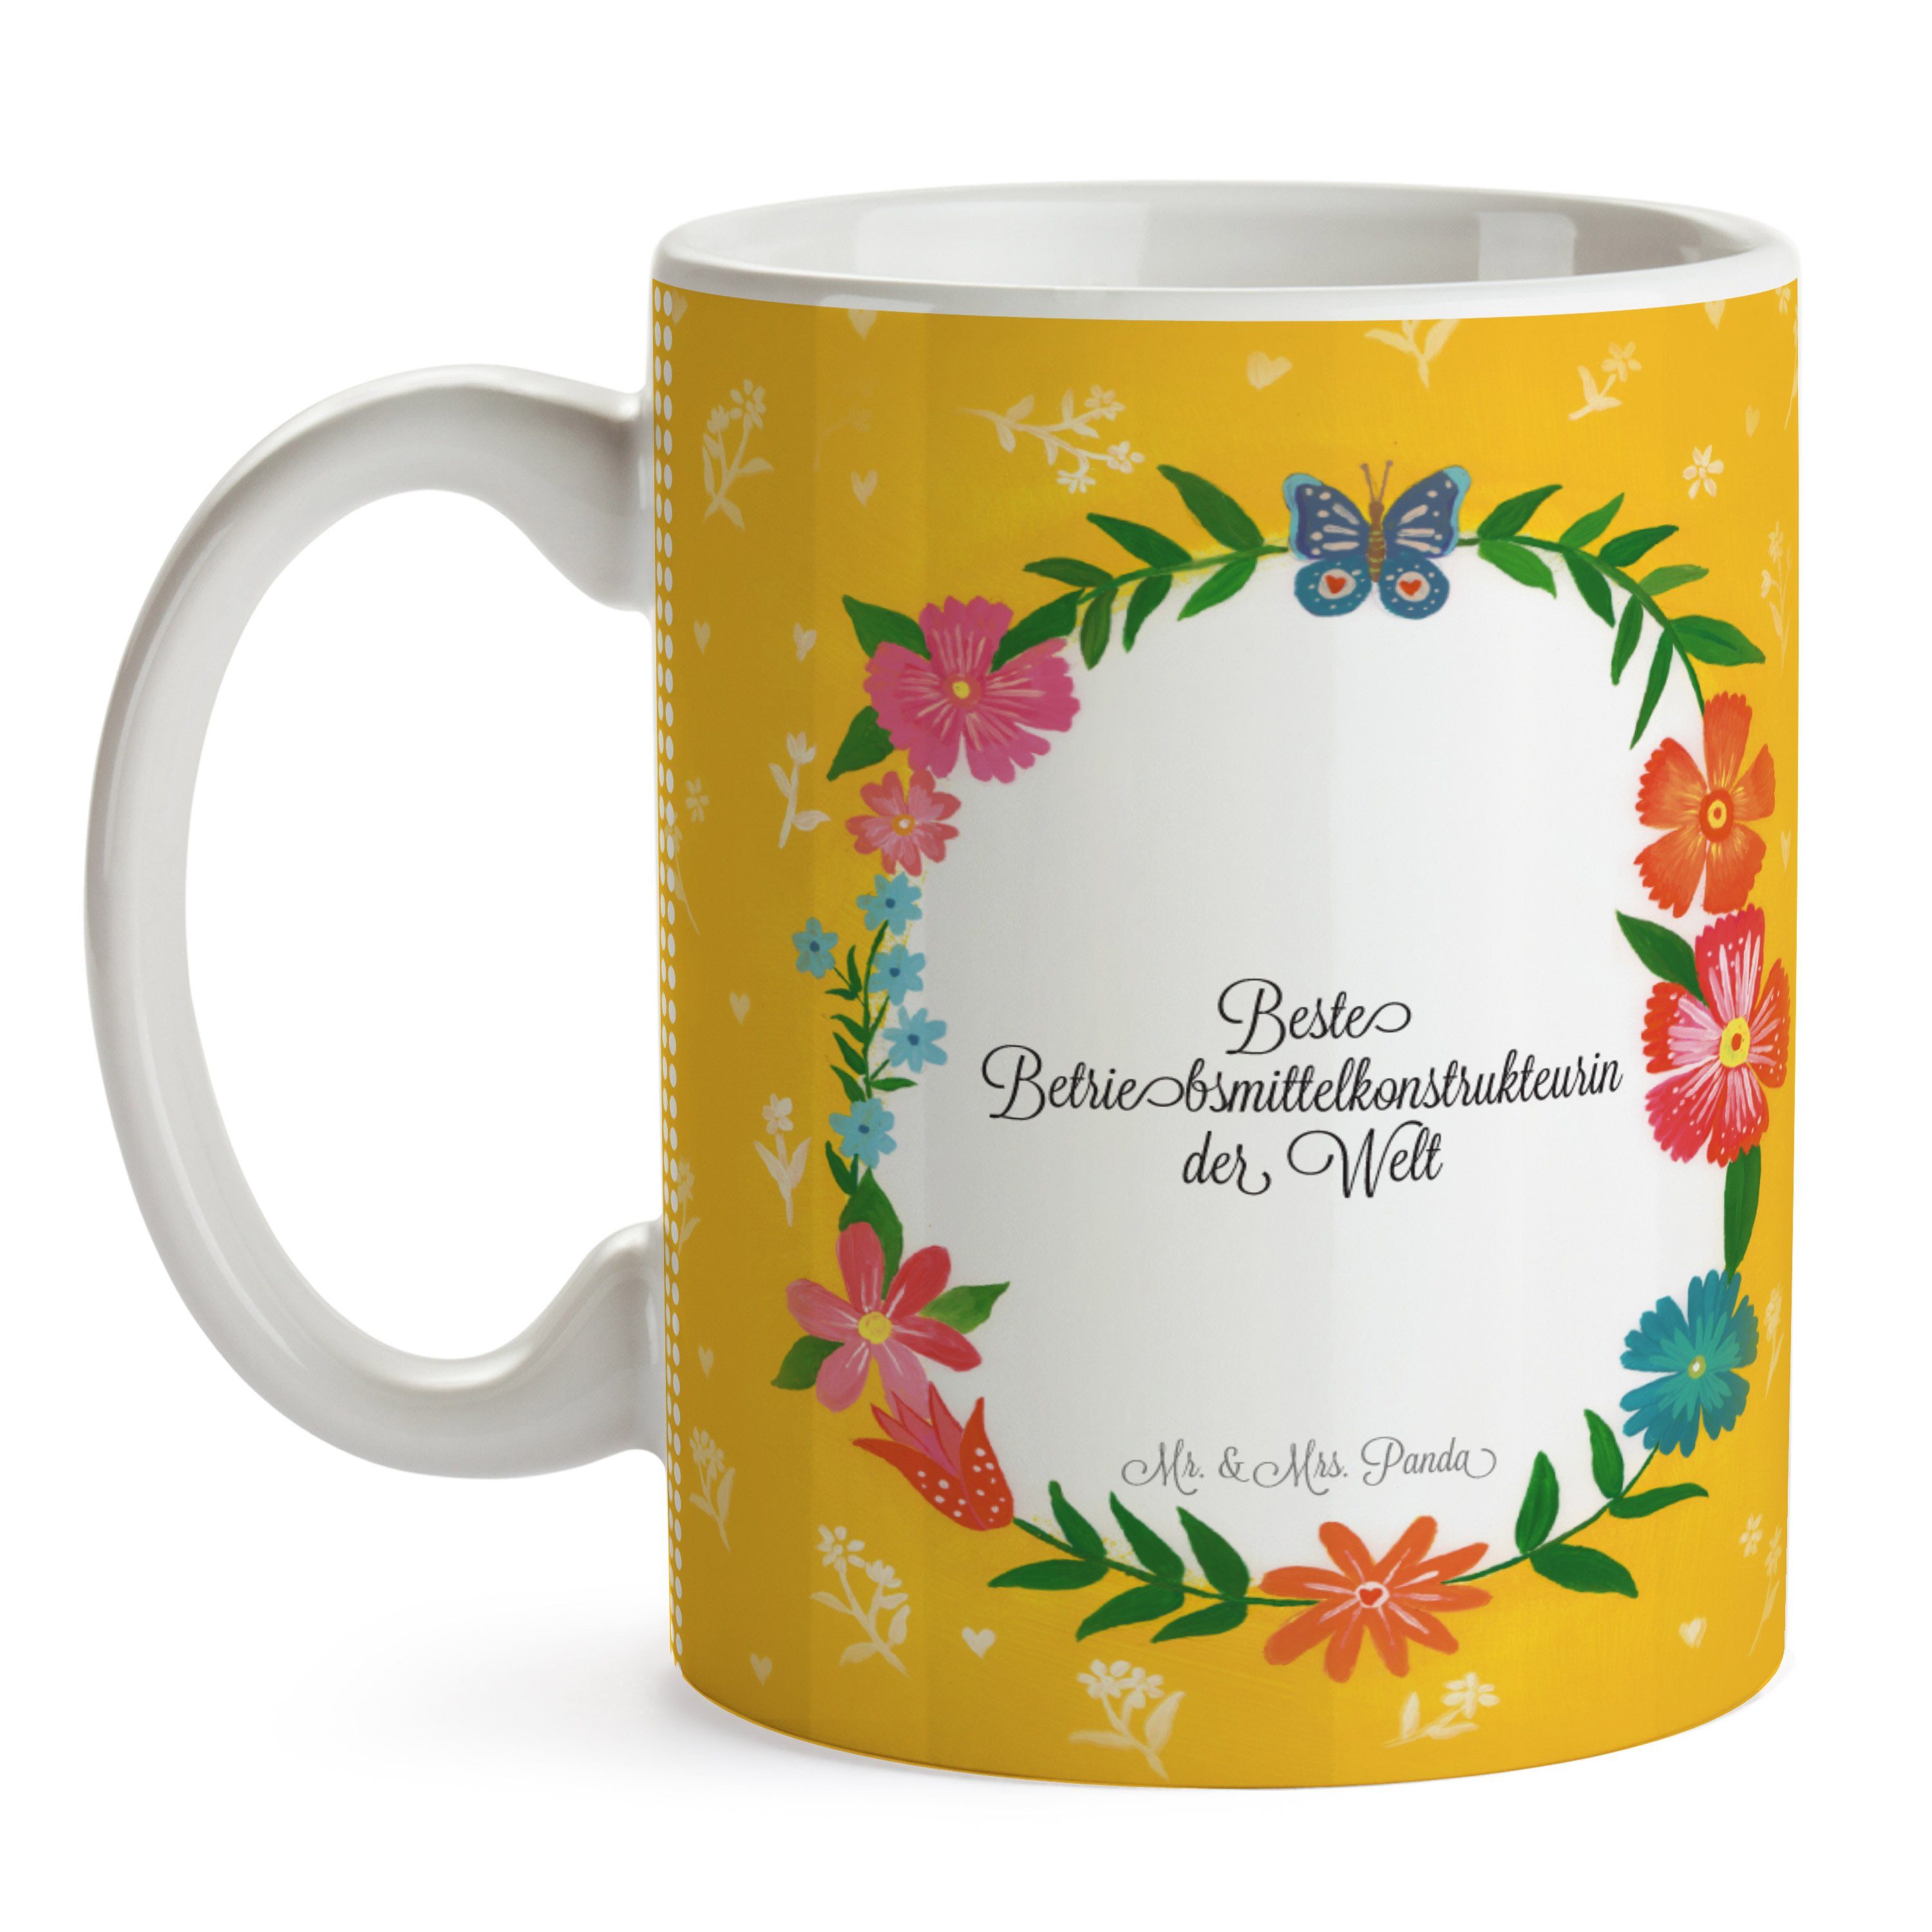 Mr. & Mrs. Panda - Tasse, Tasse Schenken, Geschenk, Keramik Betriebsmittelkonstrukteurin Kaffeebeche